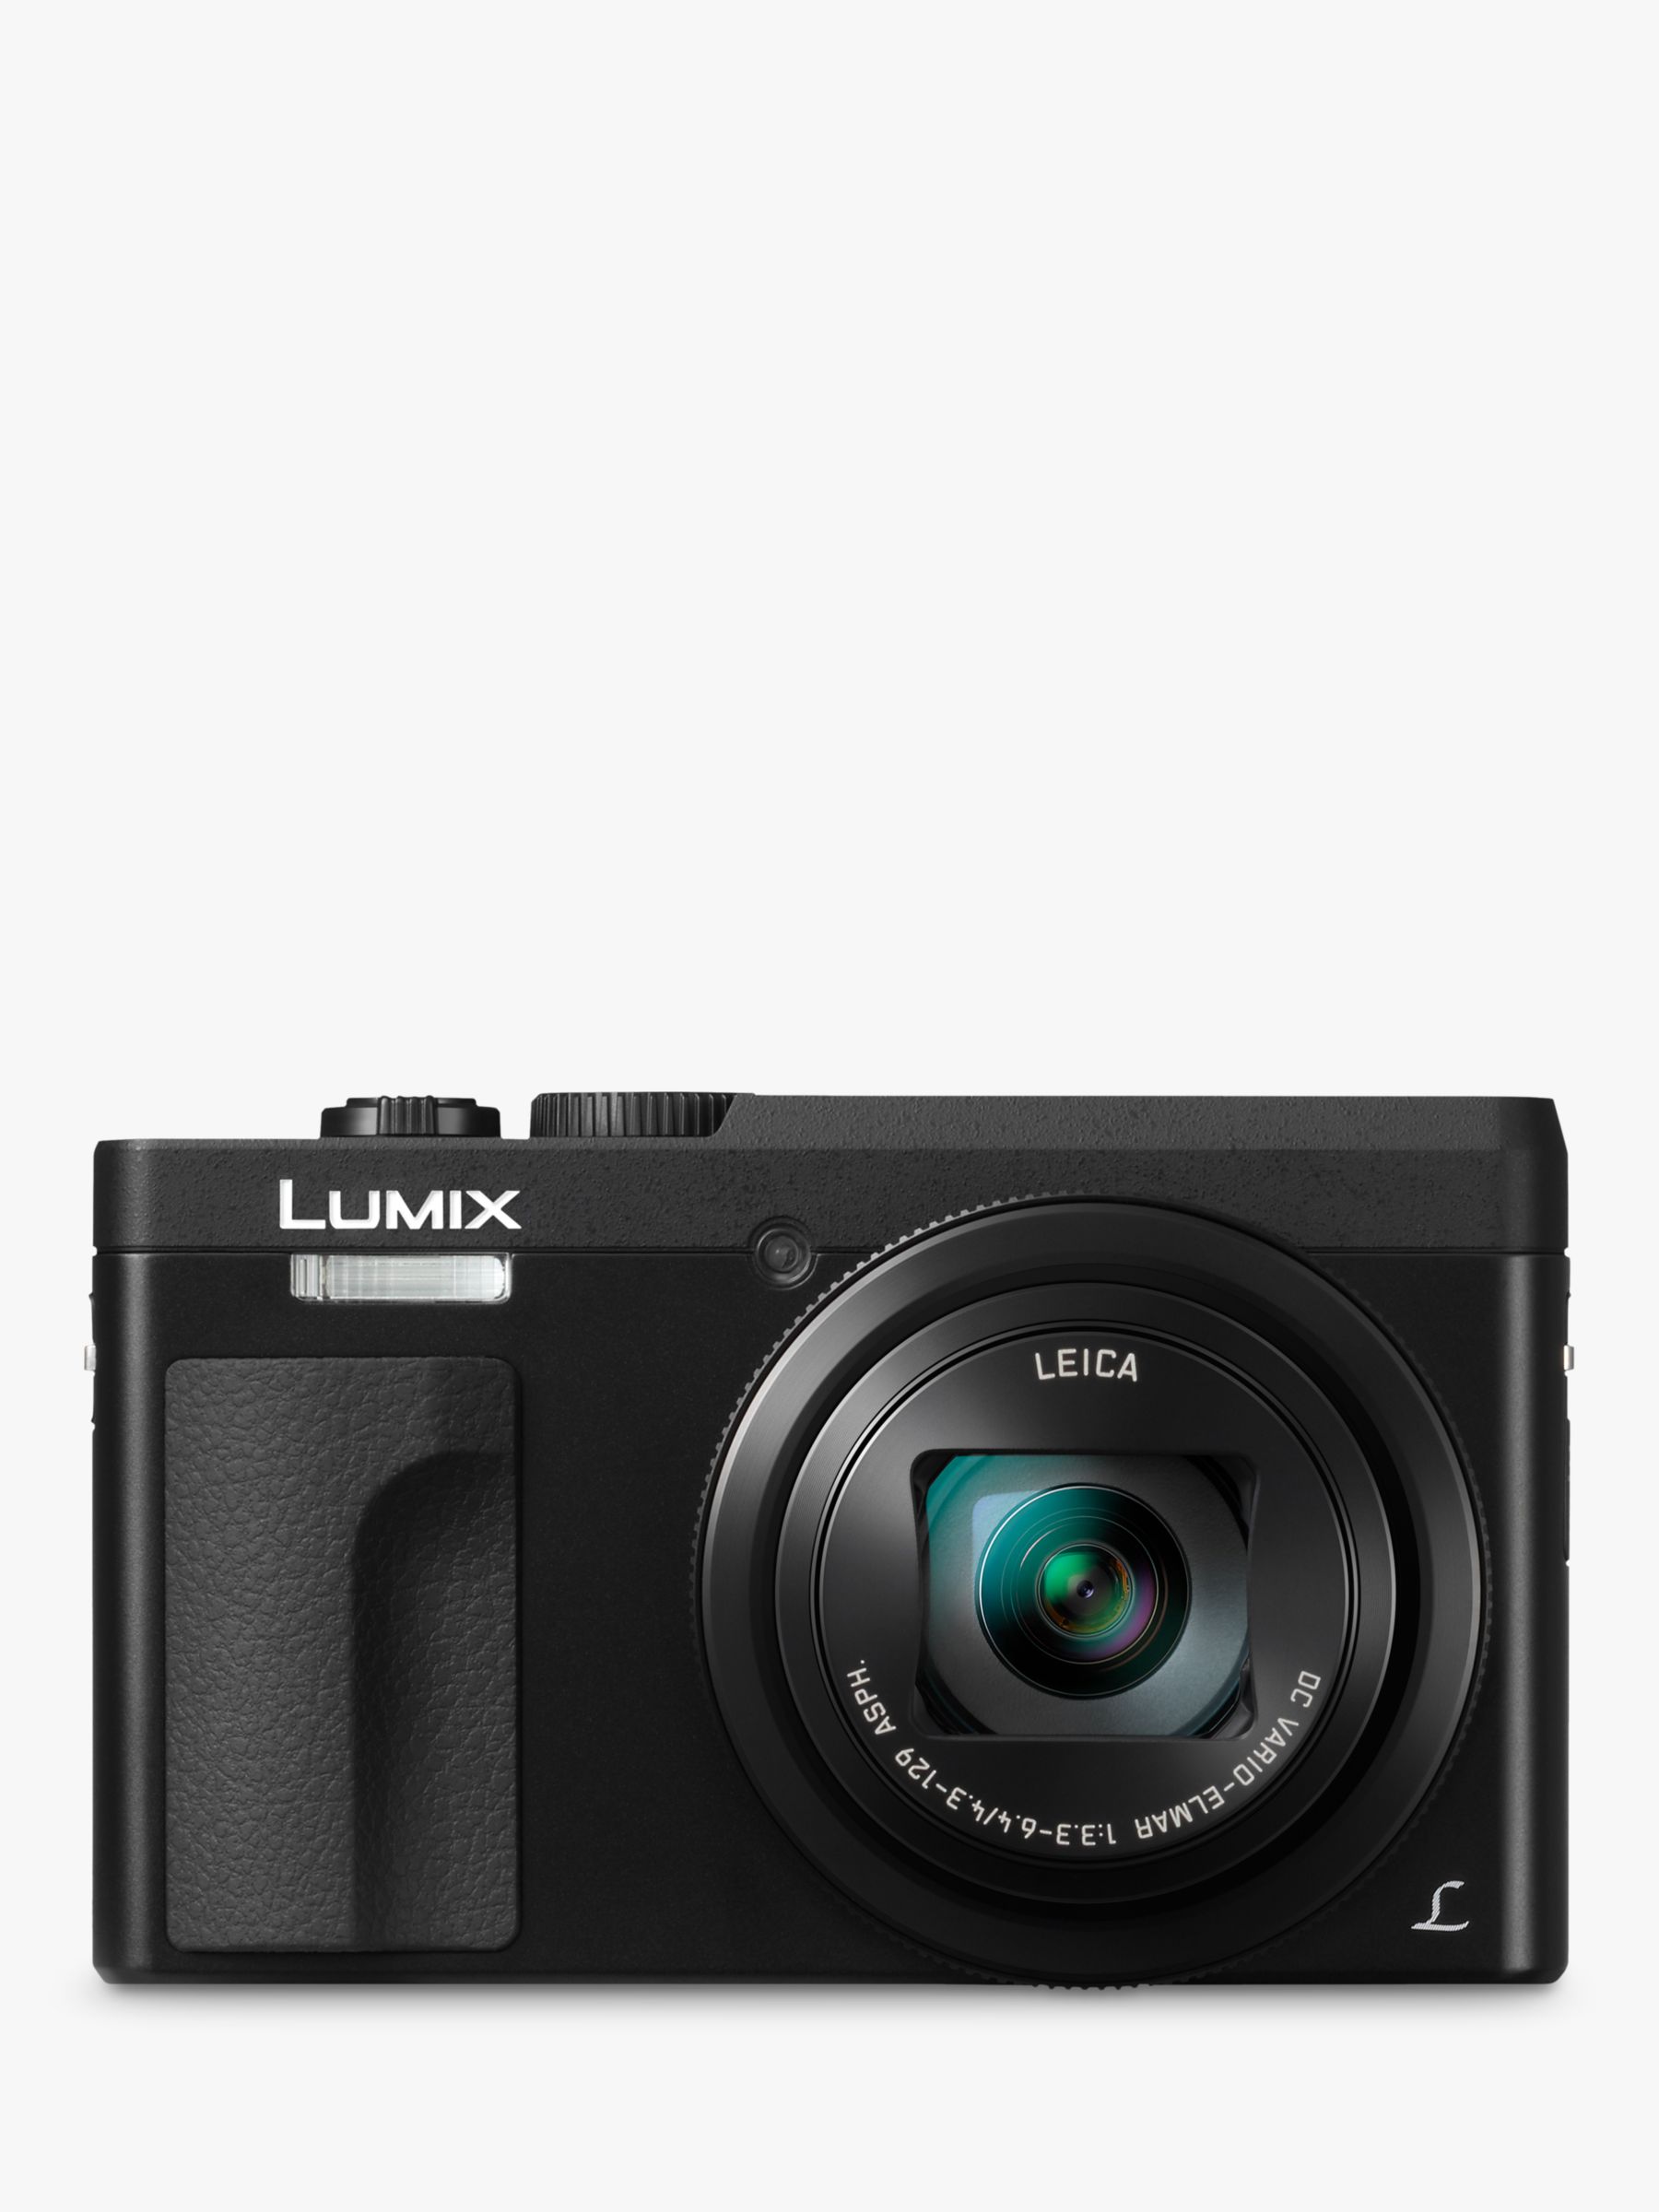 Panasonic Lumix DC-TZ90 Super Zoom Digital Camera, 4K Ultra HD, 20.3MP, 30x Optical Zoom, Wi-Fi, EVF, 3 LCD Tiltable Touch Screen